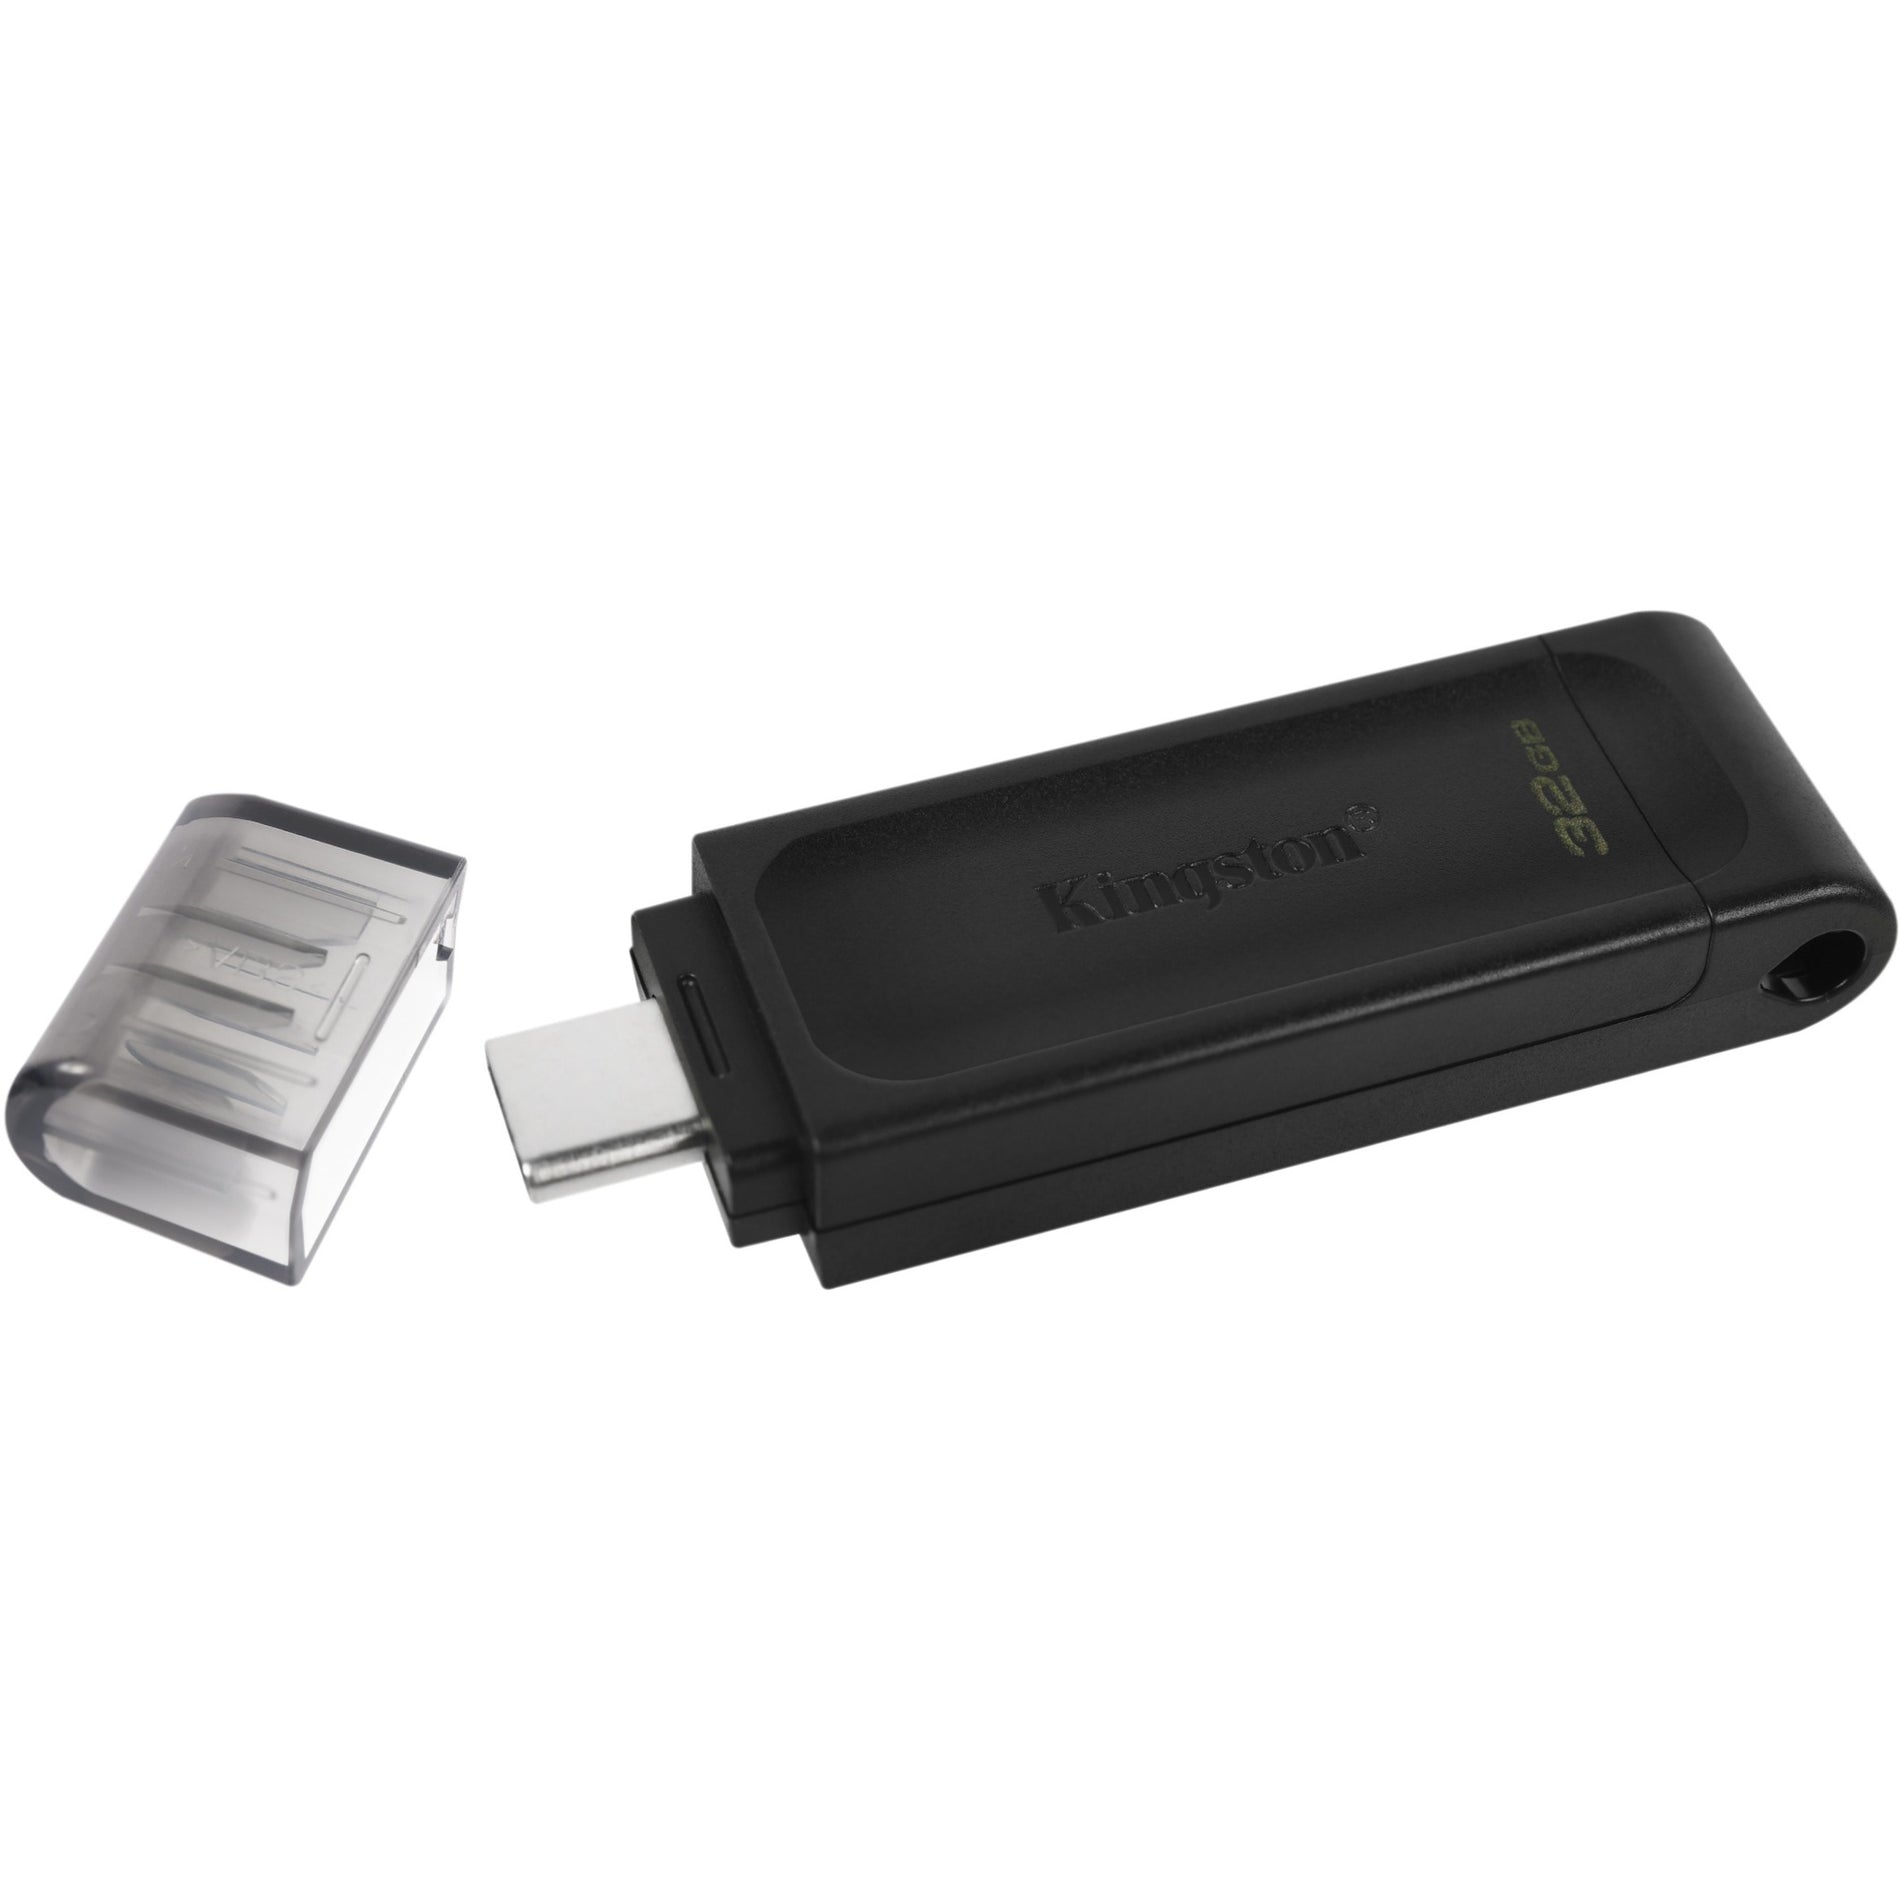 Kingston DT70/32GB DataTraveler 70 USB-C Flash Drive, Lightweight, Portable, 32GB Storage